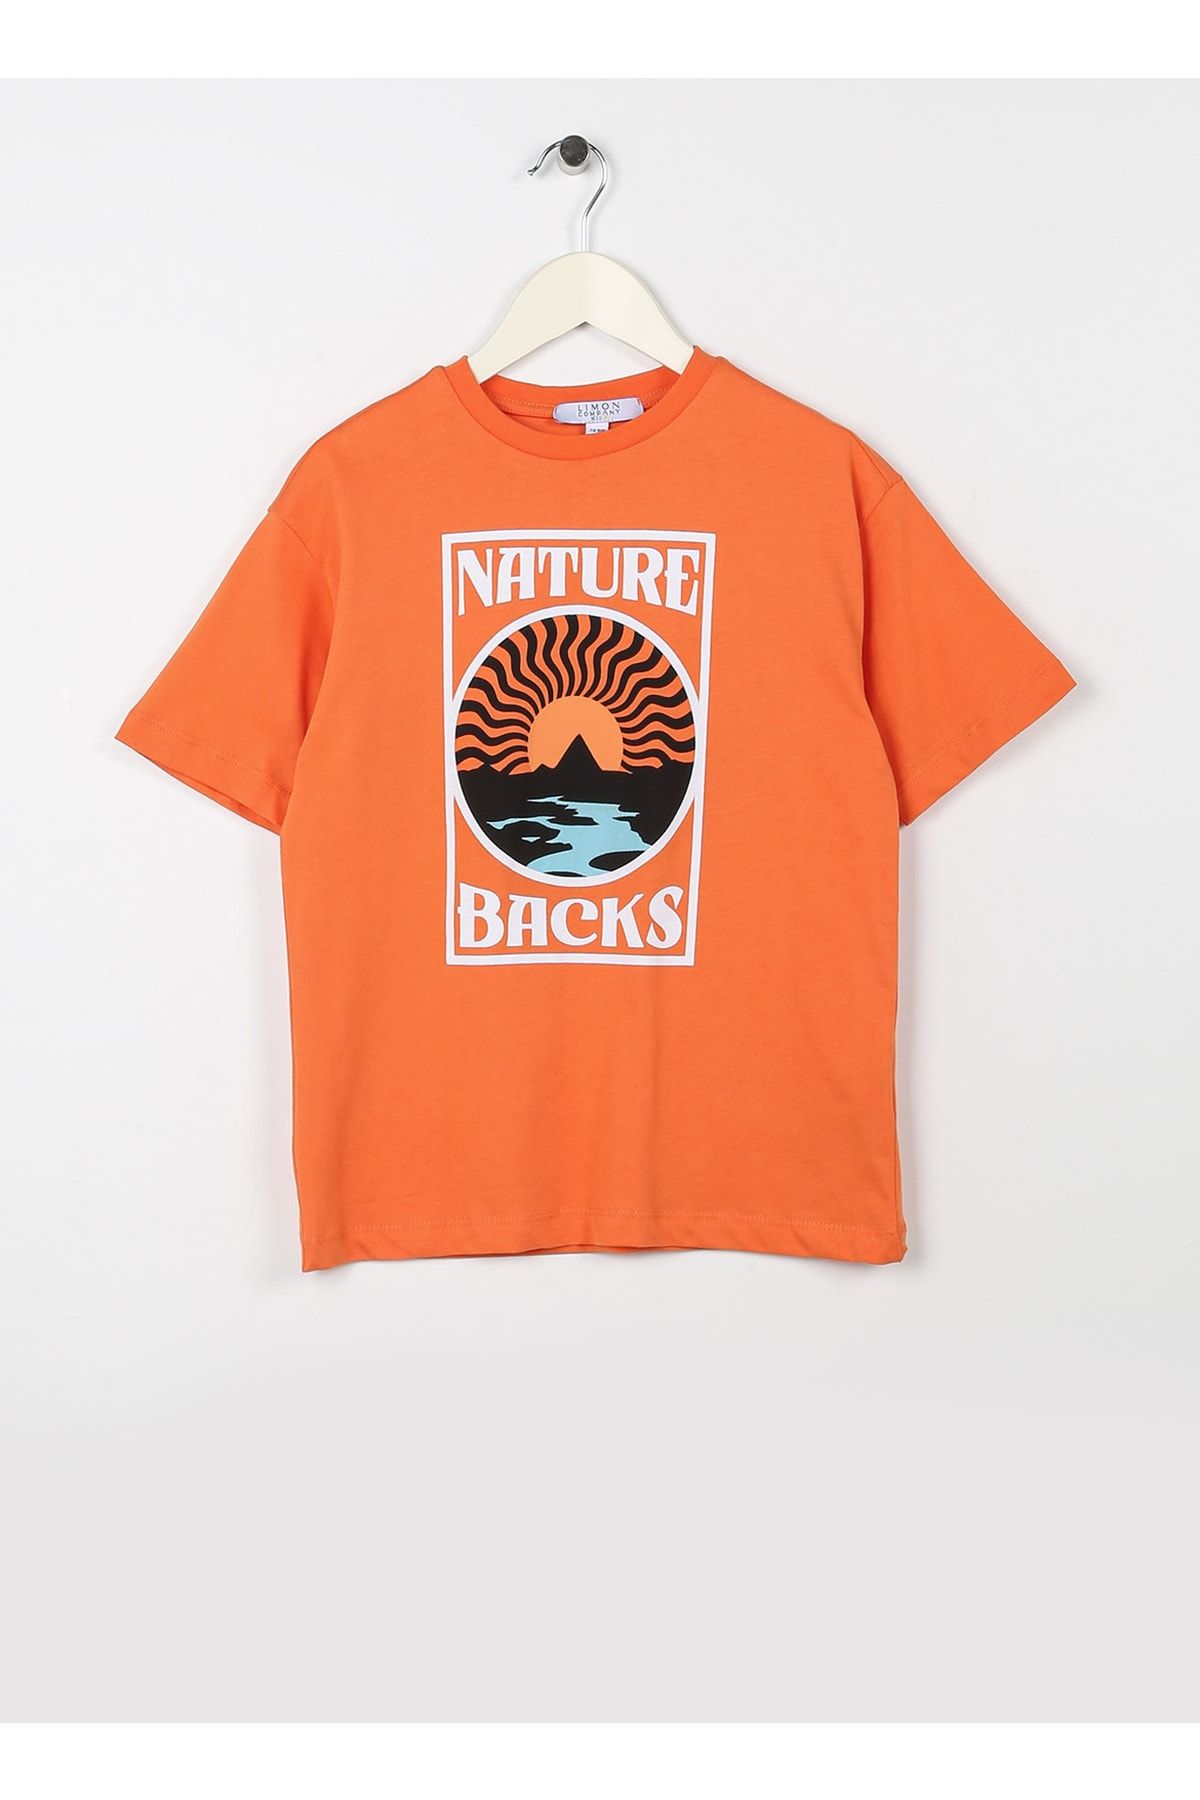 LİMON COMPANY Limon Baskılı Turuncu Erkek Çocuk T-shirt Nature Boy-23